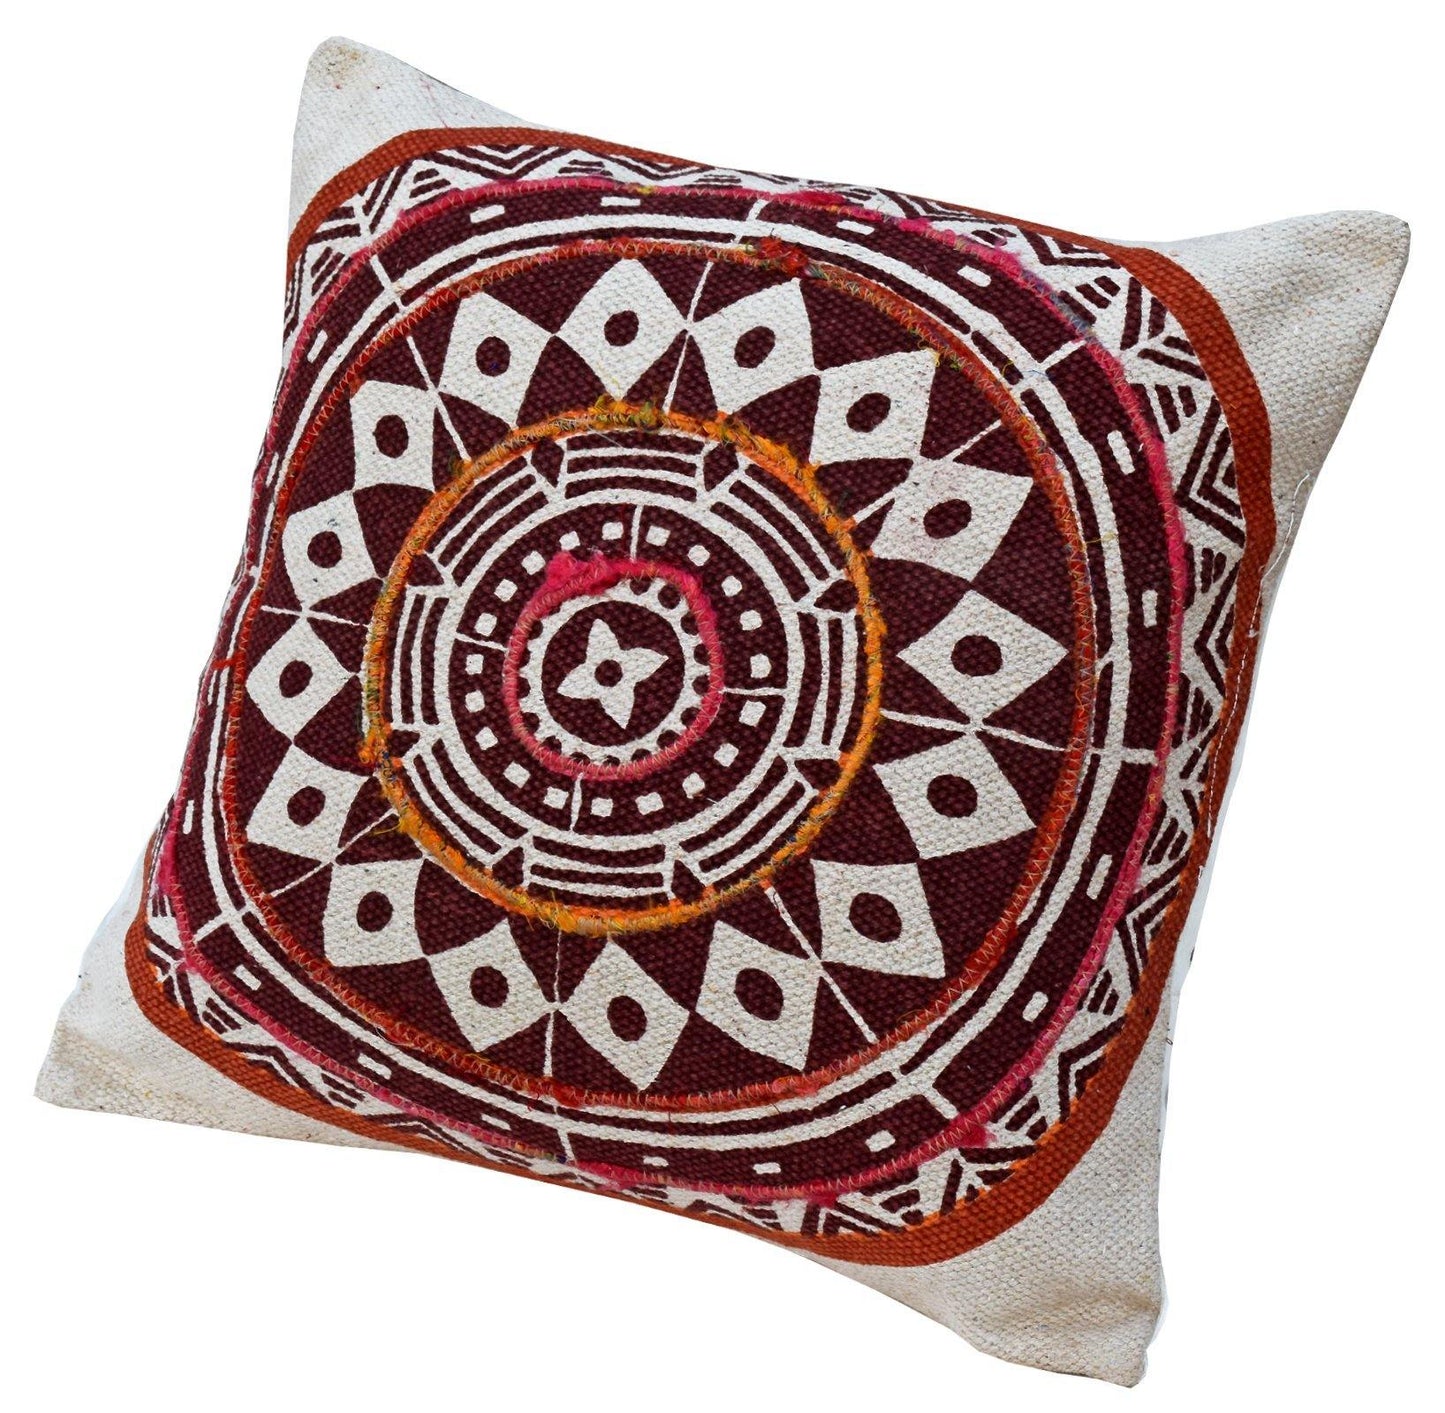 16" Designer Cushion Cover - Mandala Red - The Teal Thread